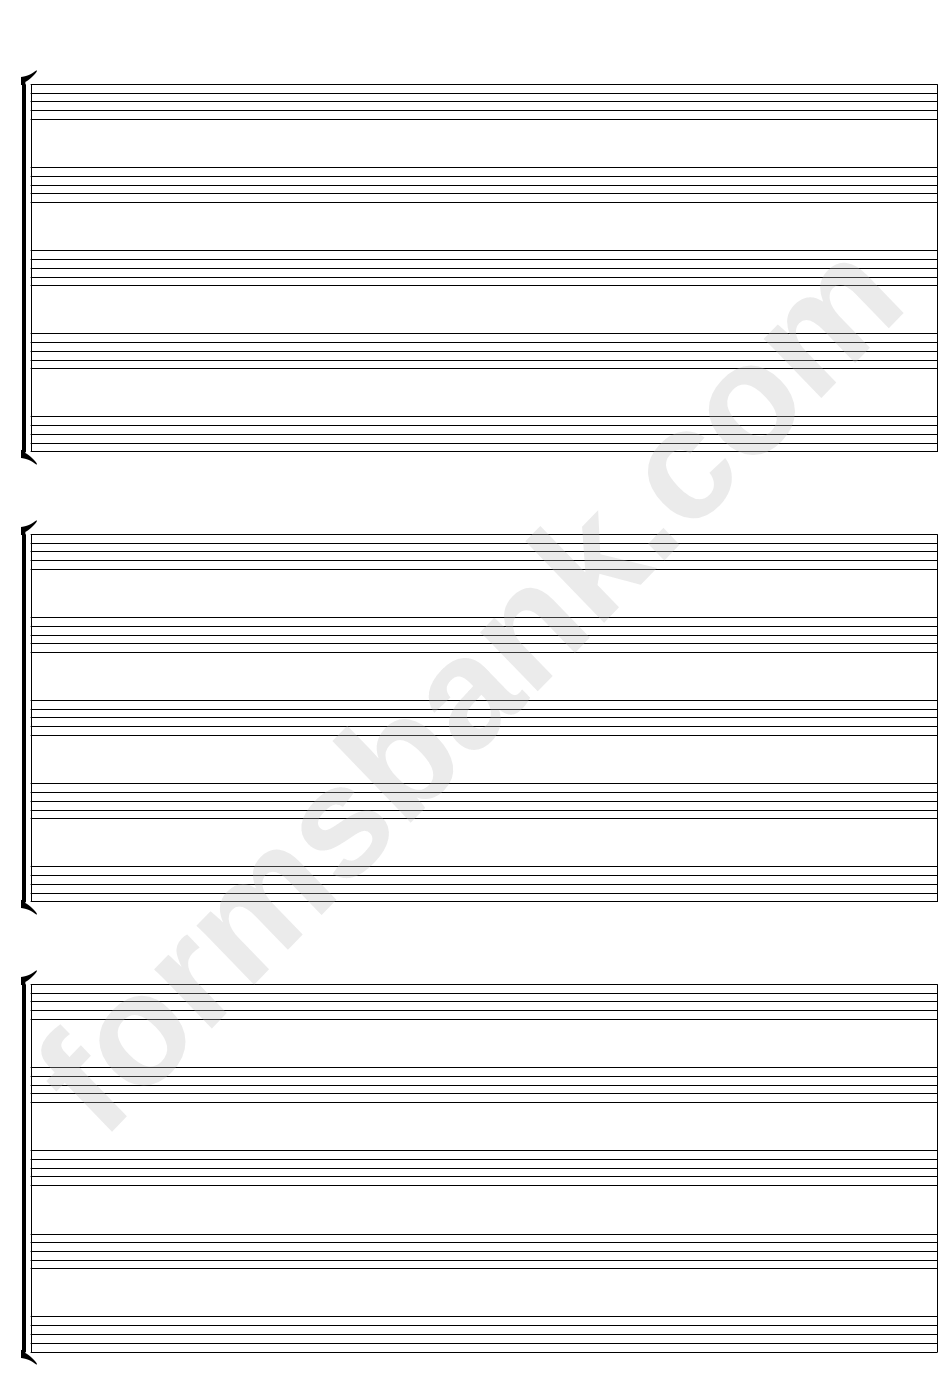 3-Stave, Quintet Format, Blank Clefs (A4 Portrait) Blank Sheet Music